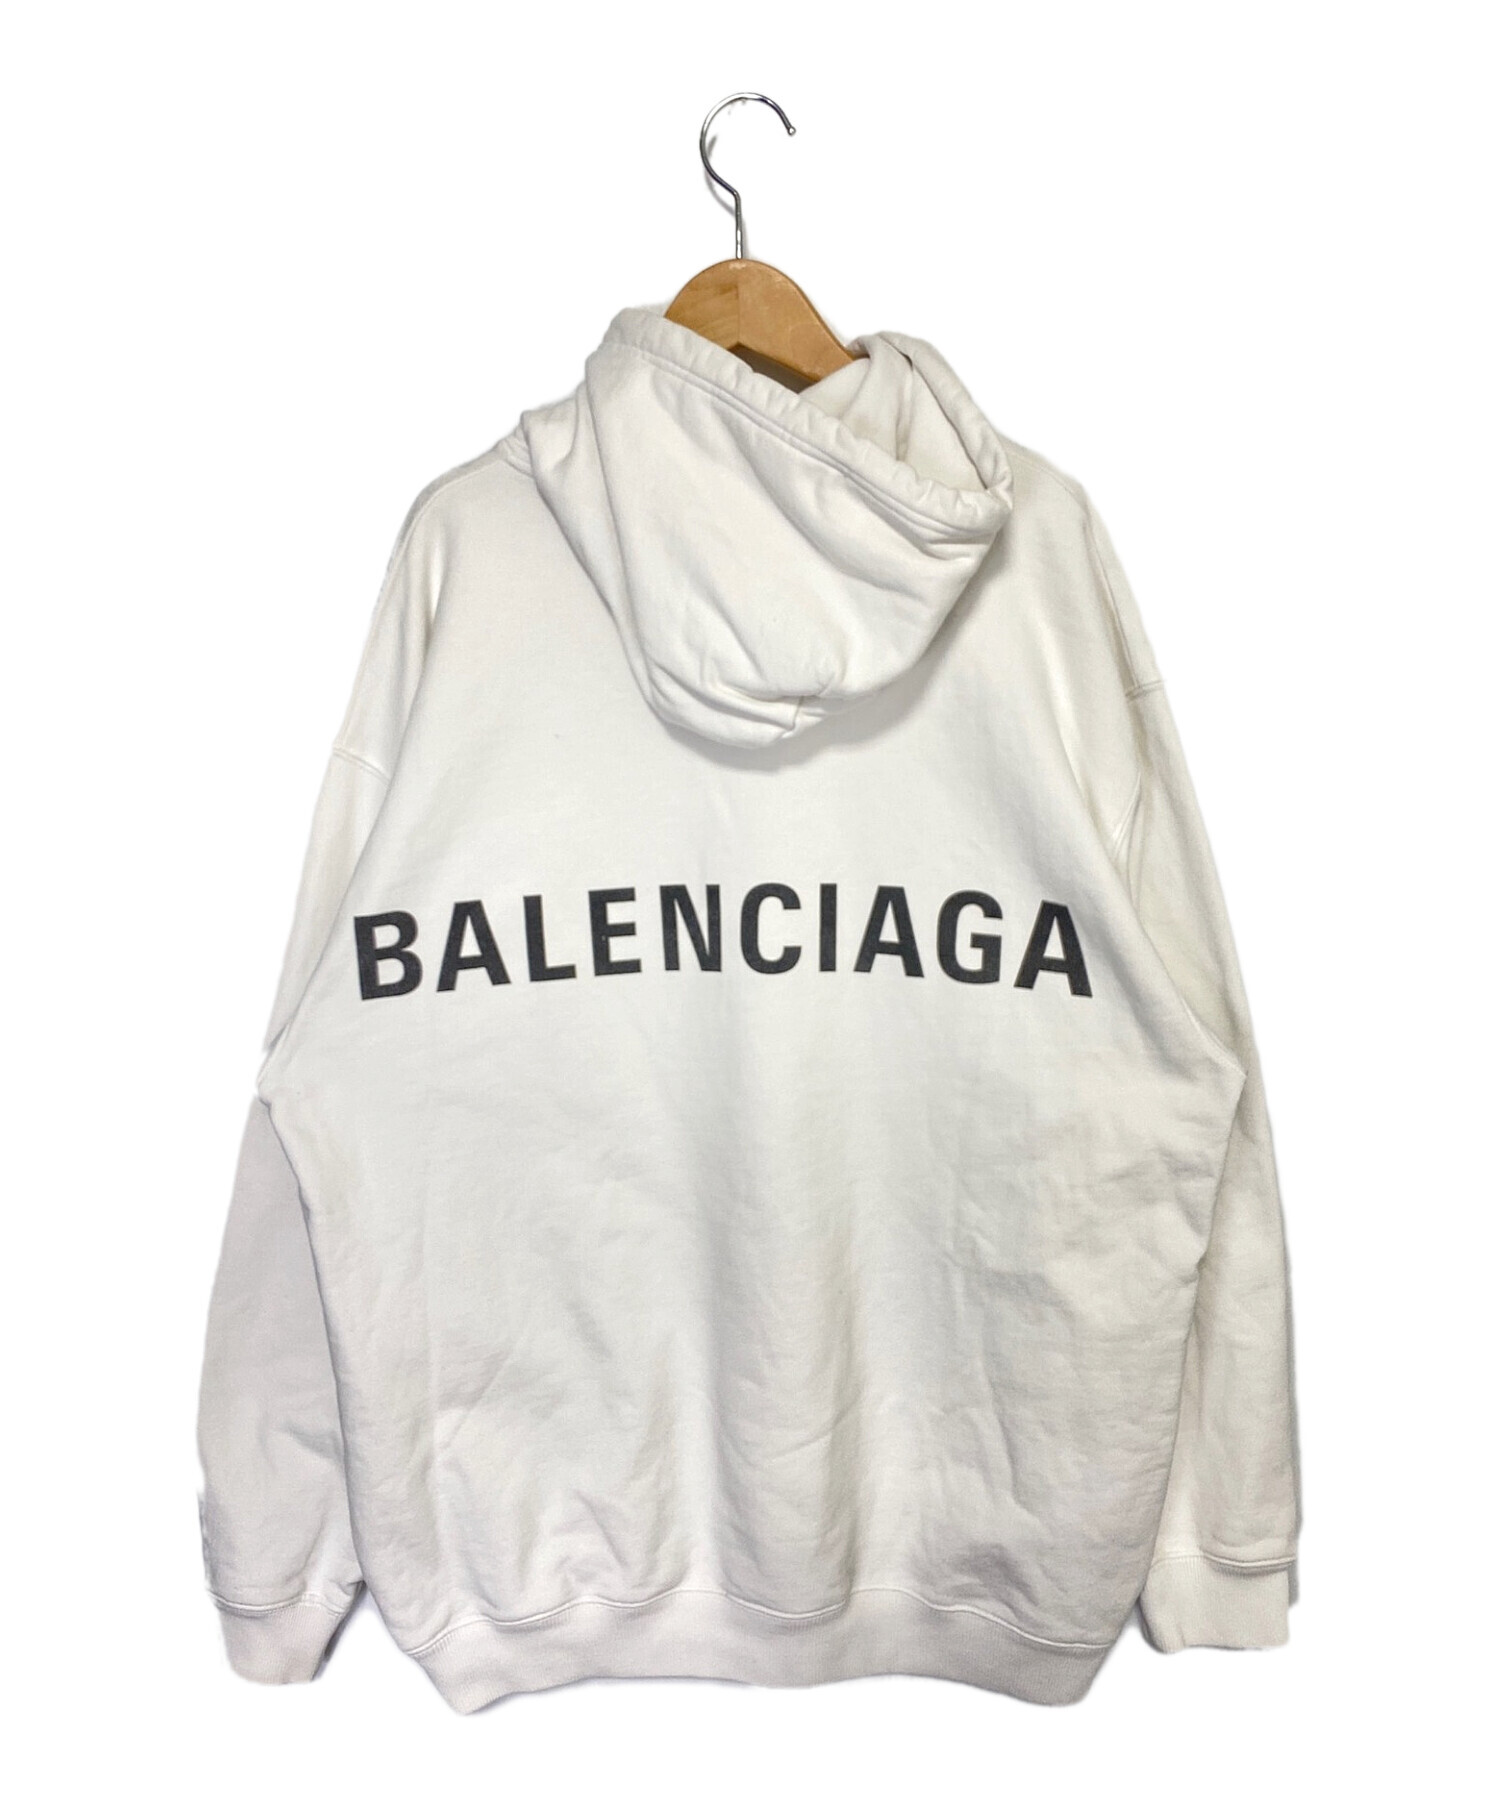 BALENCIAGA (バレンシアガ) パーカー ホワイト サイズ:XS